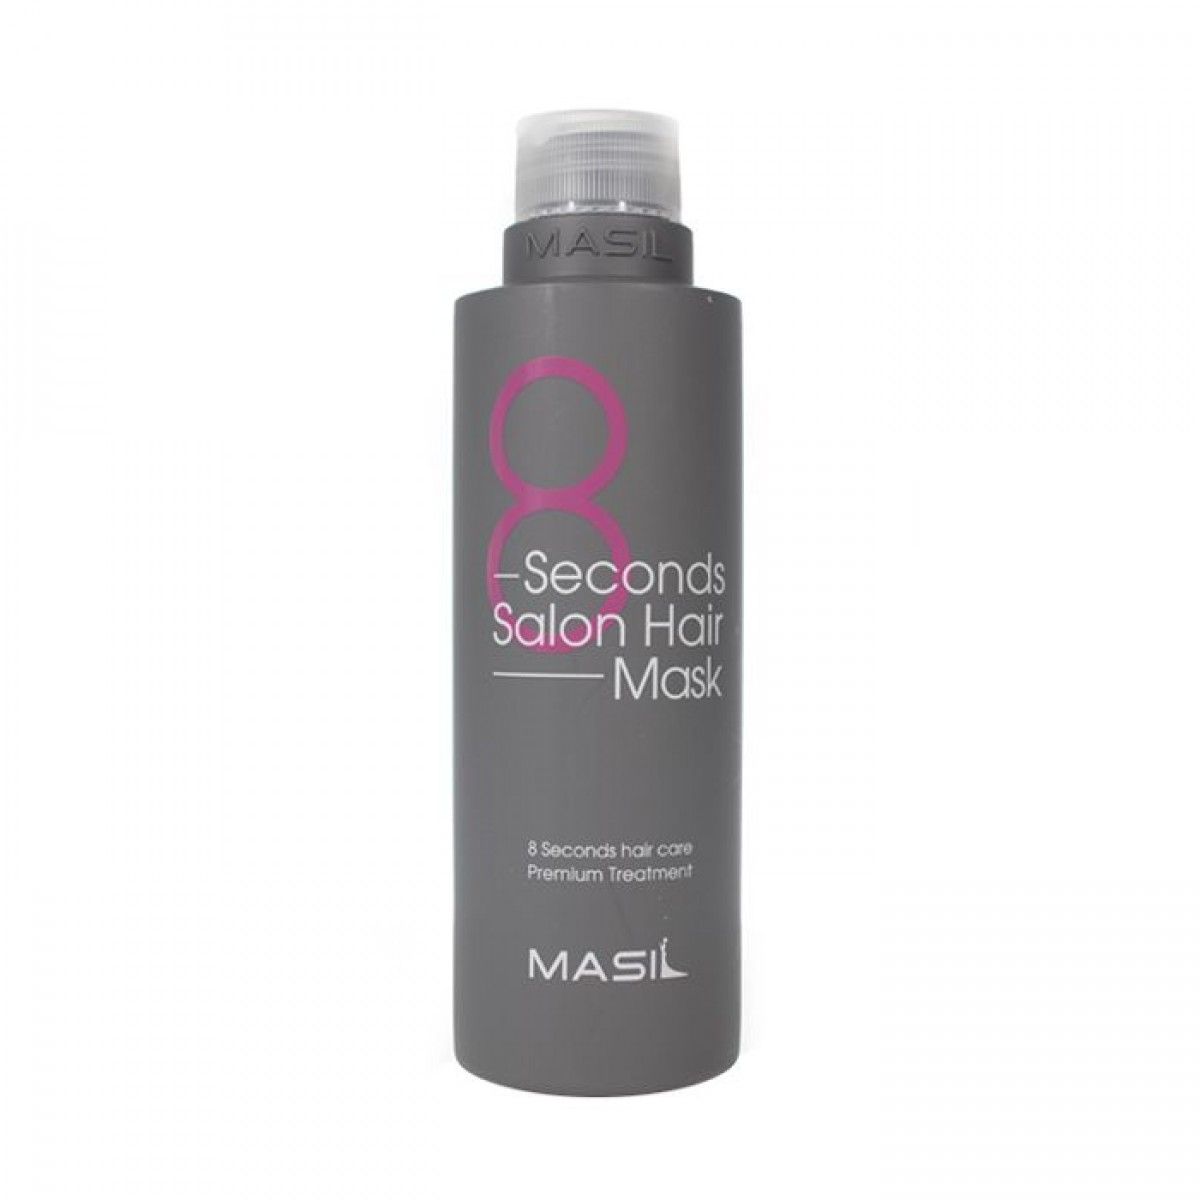 Masil 8 seconds salon отзывы. Masil 8 seconds Salon hair Mask 100ml. Маска masil 8 second 100 мл. Masil маска для волос салонный эффект за 8 секунд - 8 seconds Salon hair Mask, 8мл. Masil маска для волос 100мл.